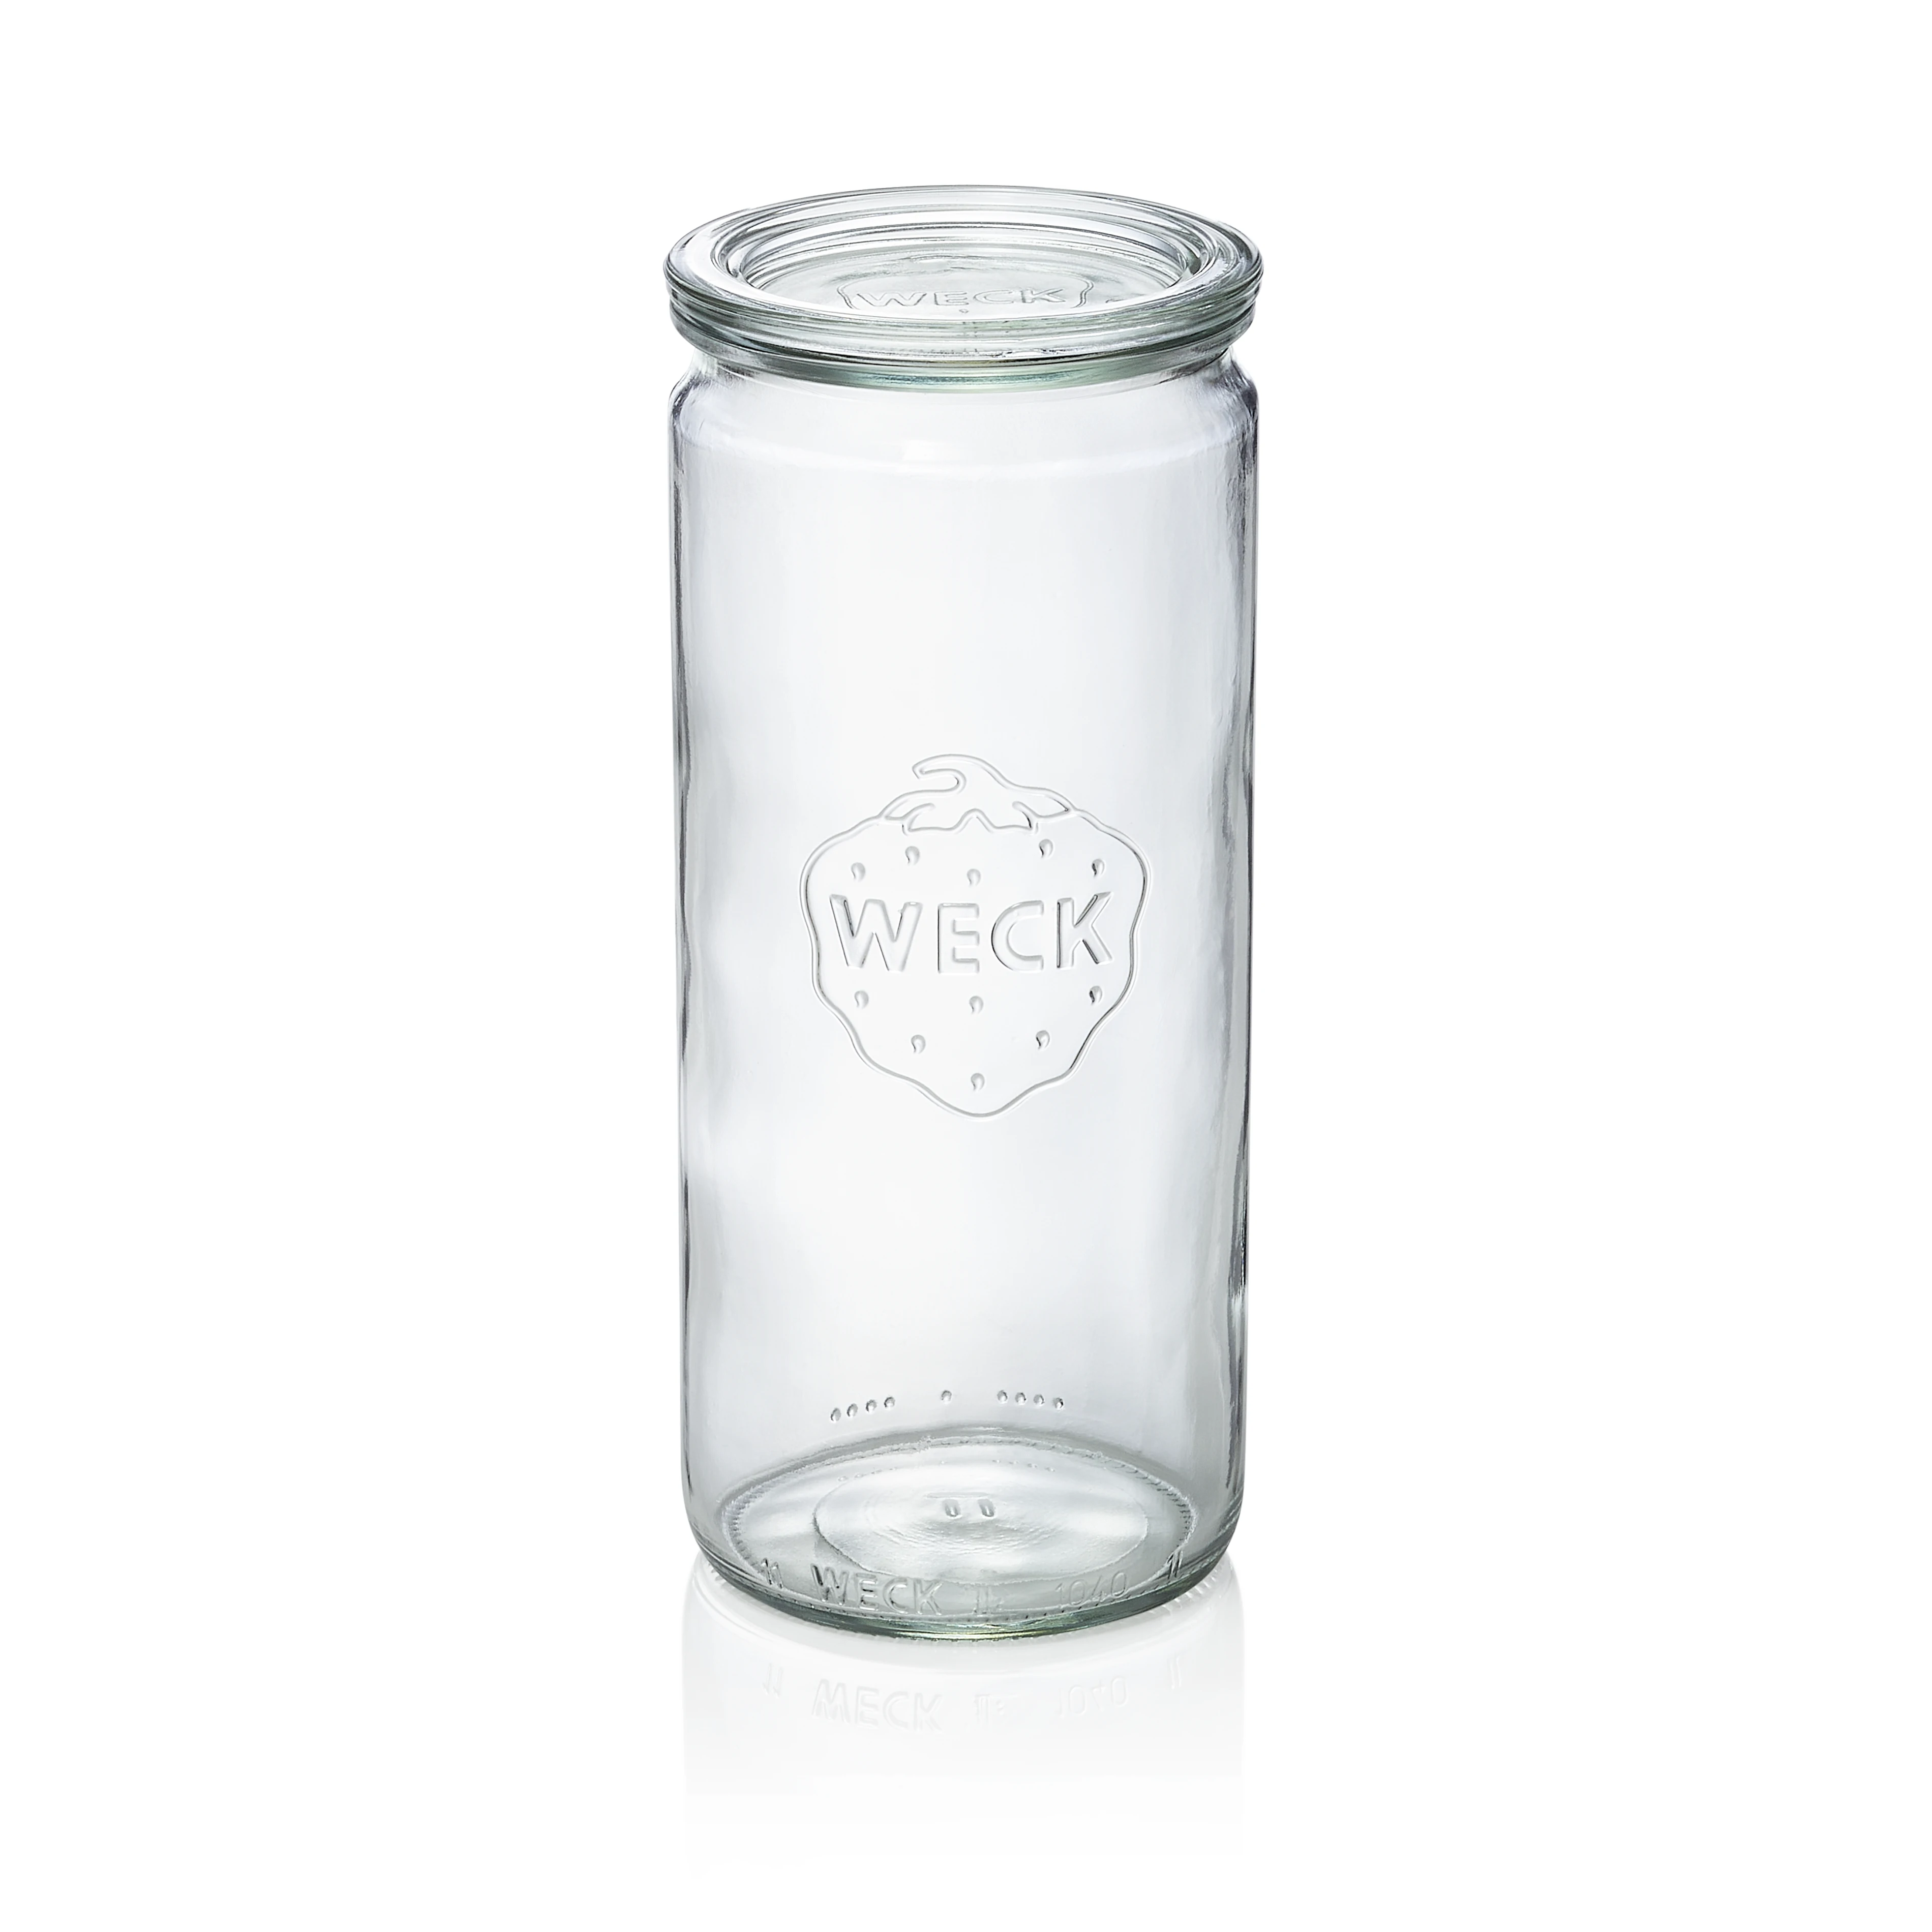 Cylinder shape glass jar